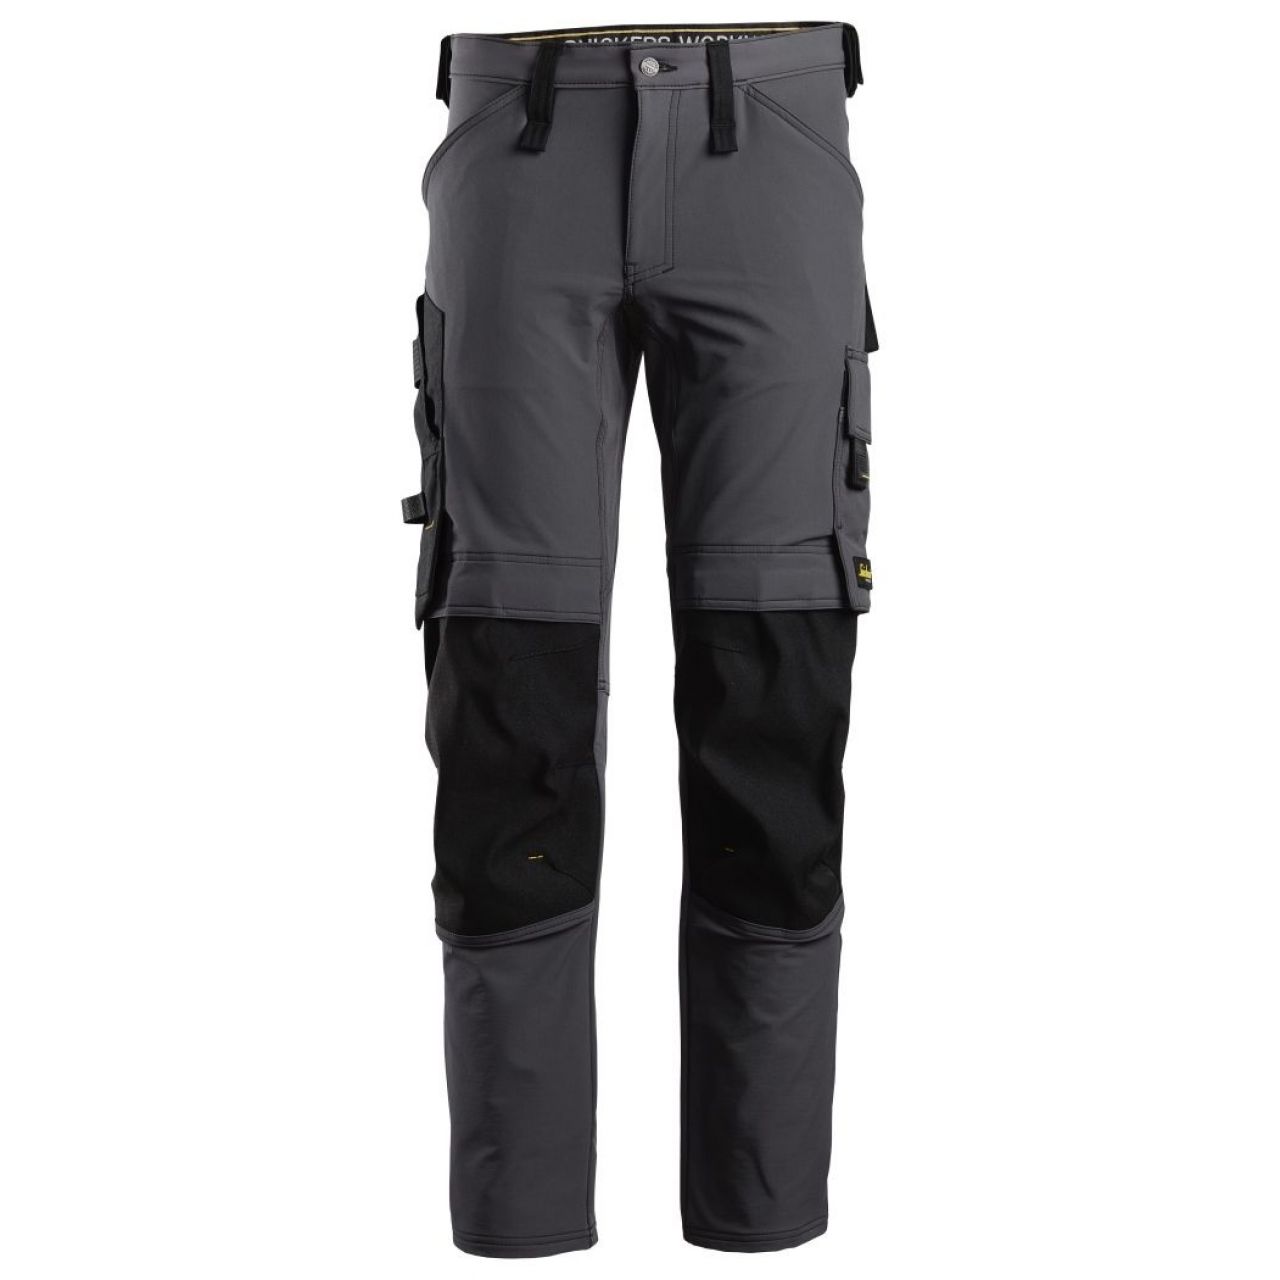 Pantalon elastico AllroundWork gris acero-negro talla 208